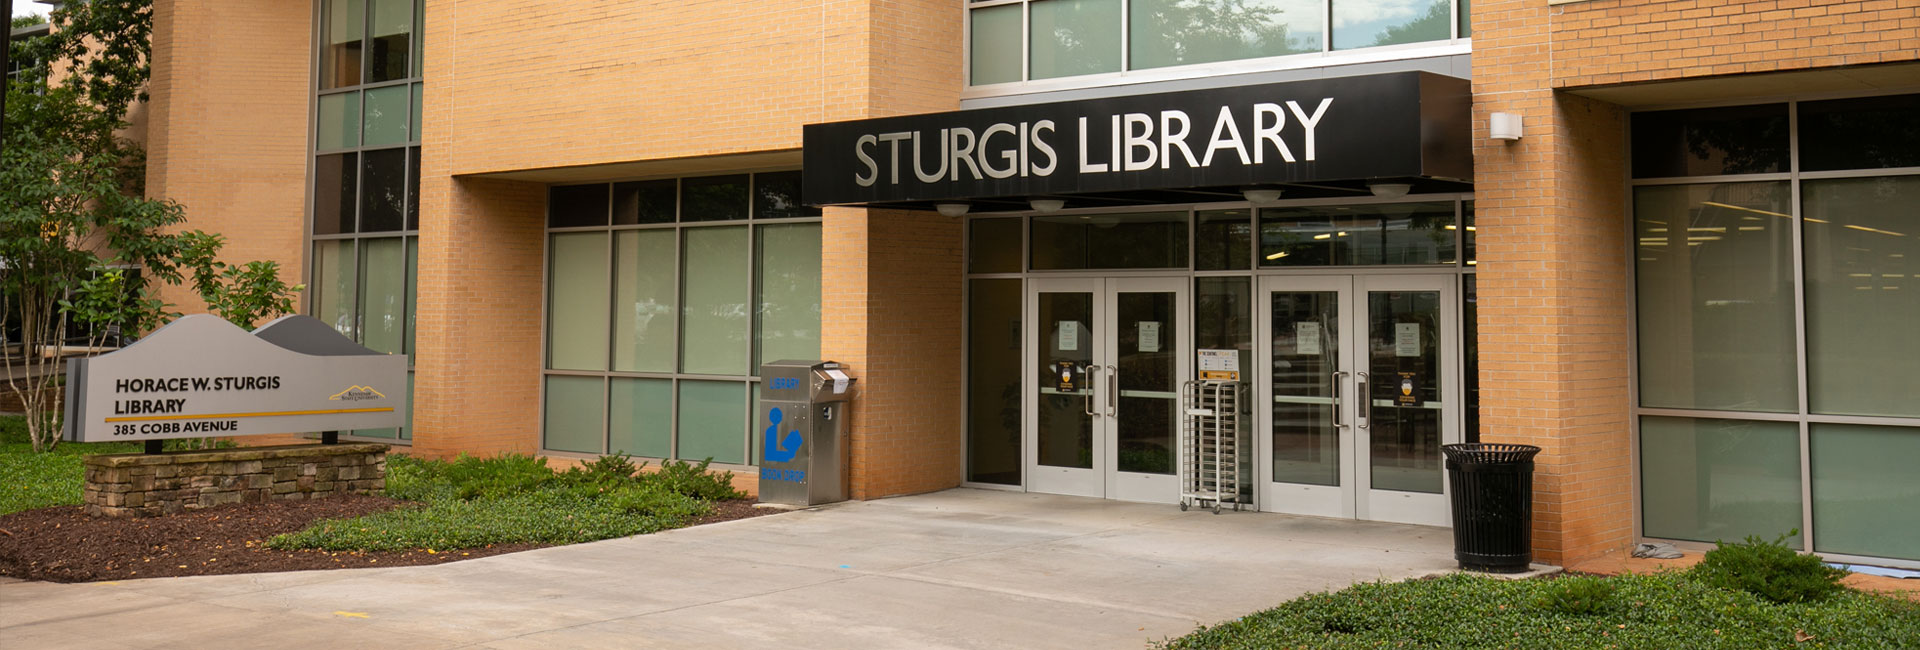 Sturgis Library Exterior